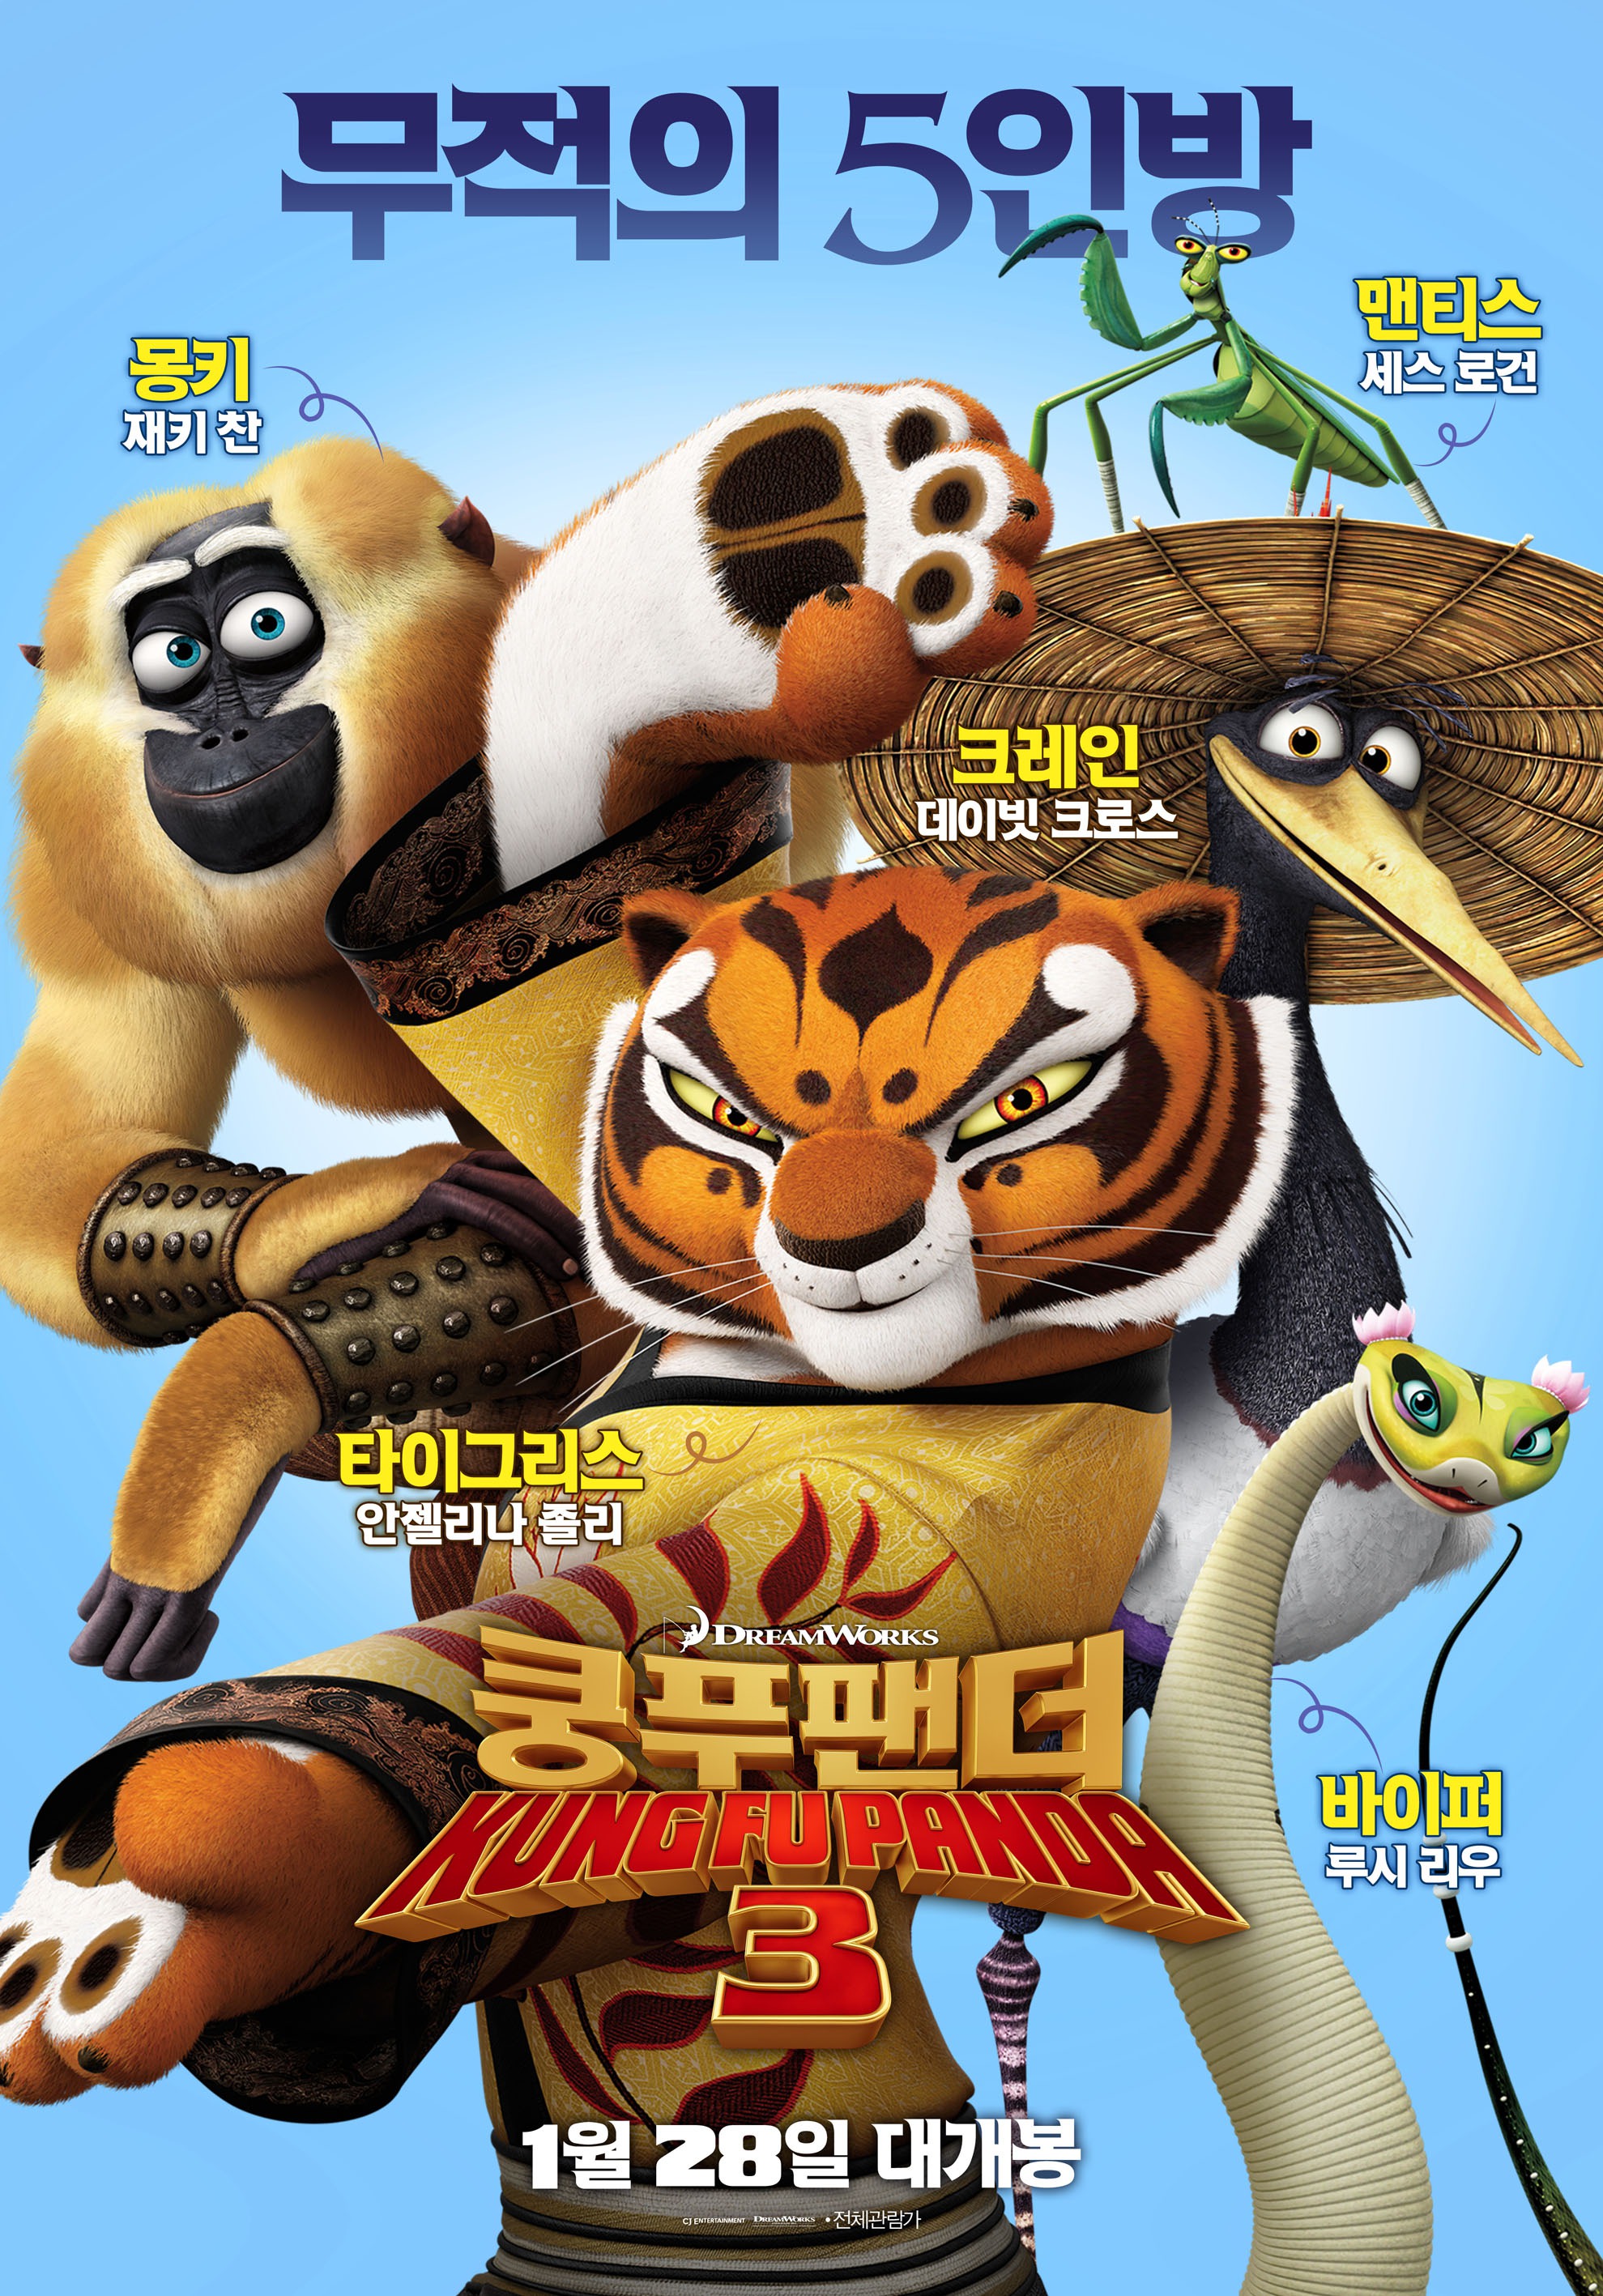 Mega Sized Movie Poster Image for Kung Fu Panda 3 (#11 of 22)